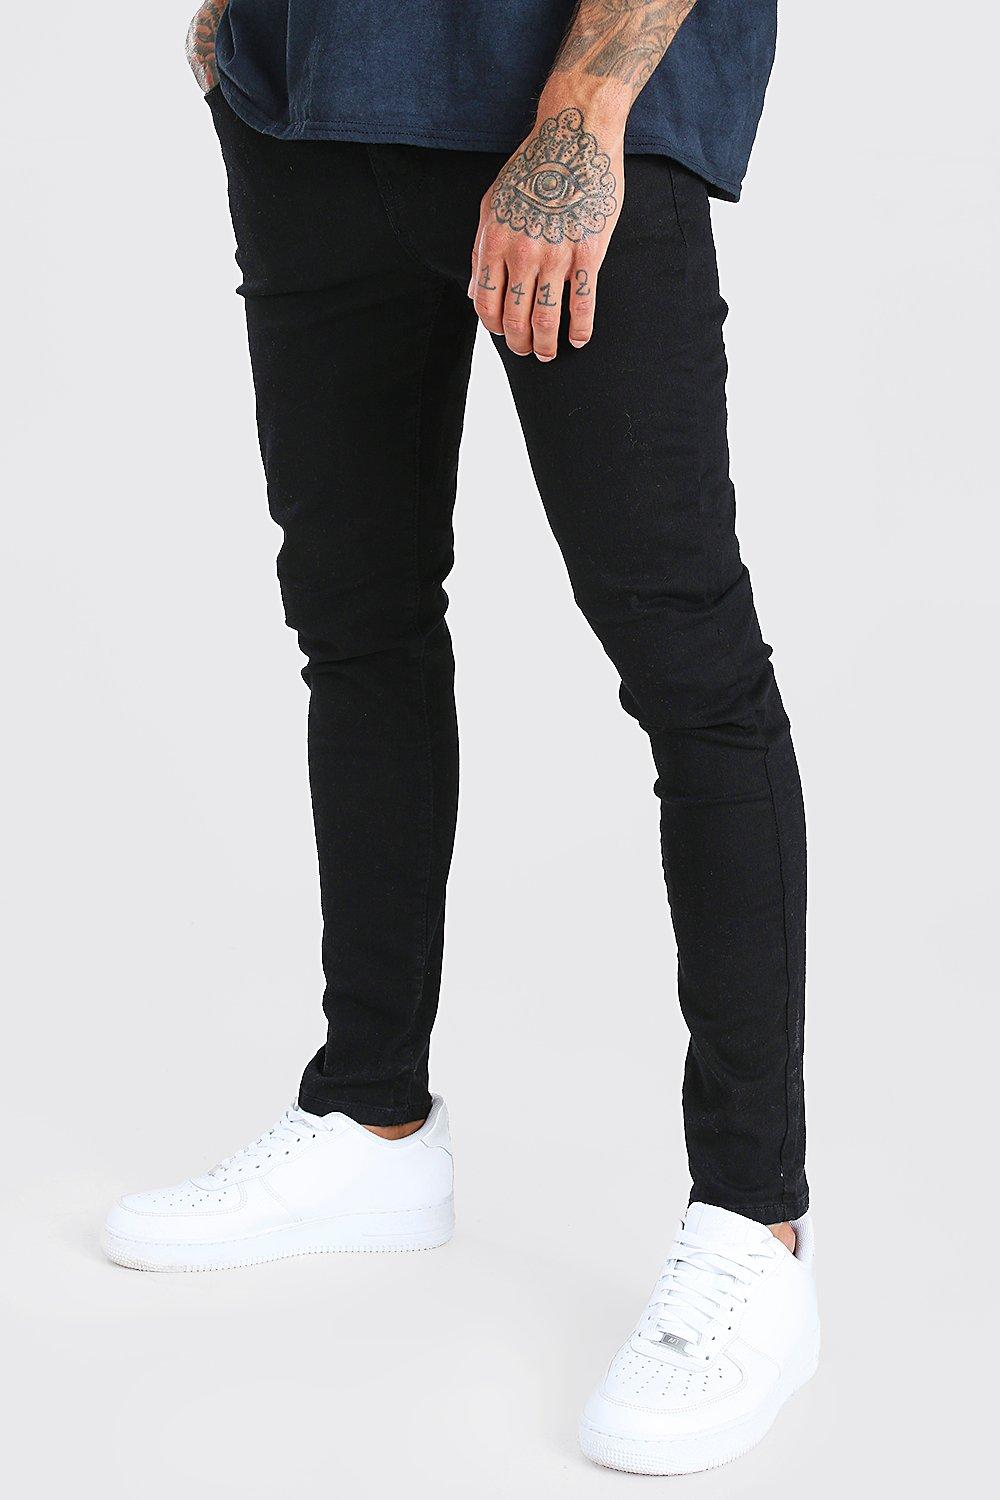 super skinny black jeans